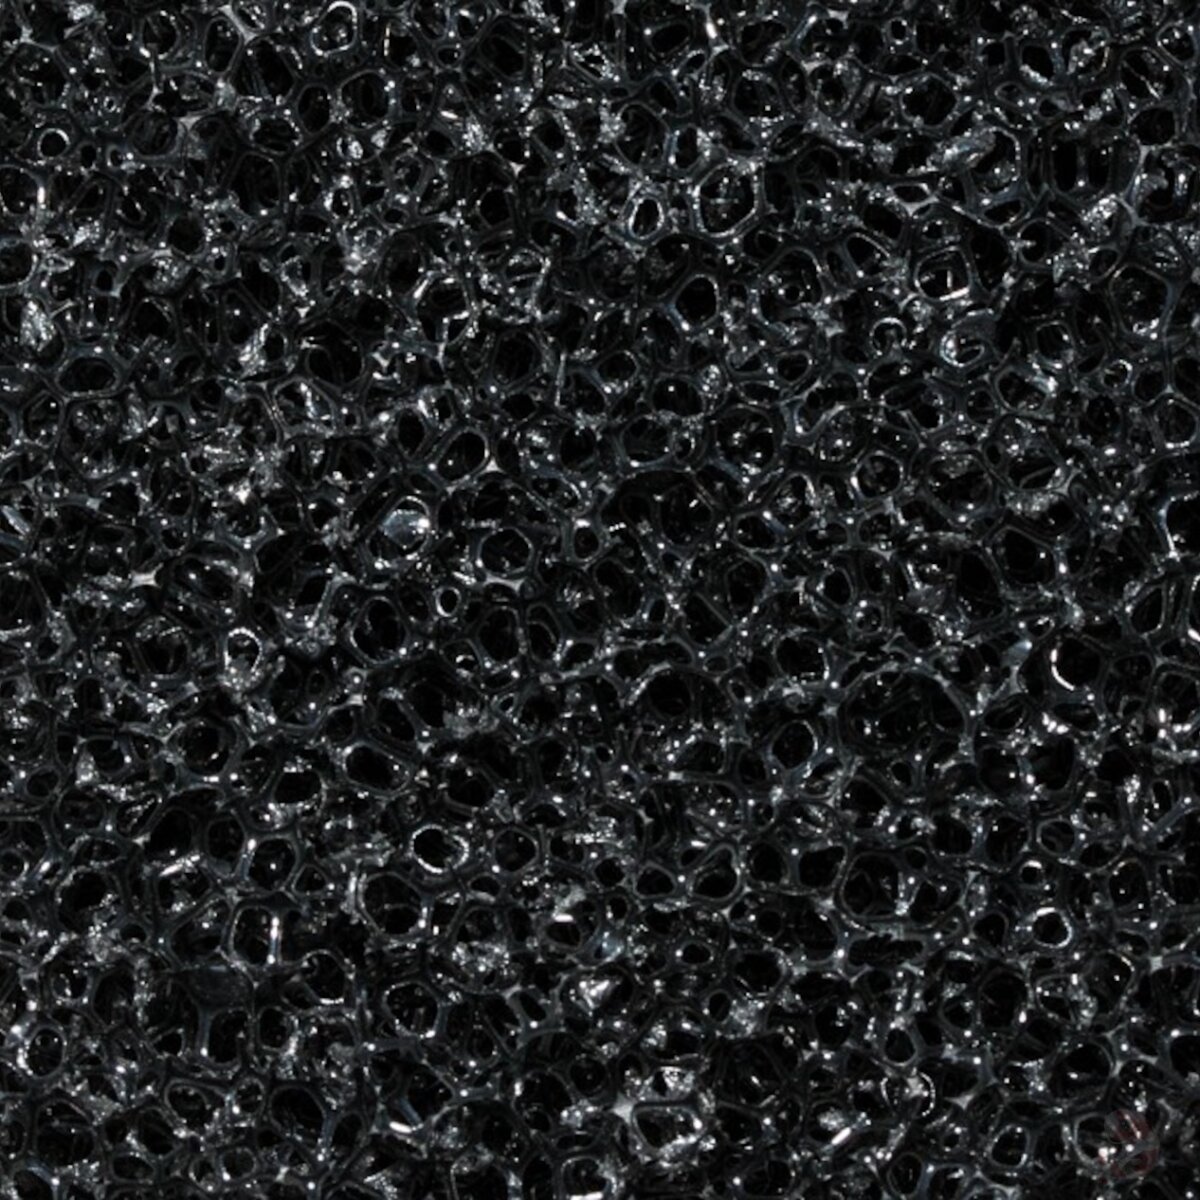 Filtermatte schwarz, 100 x 50 x 3 cm, 20 ppi